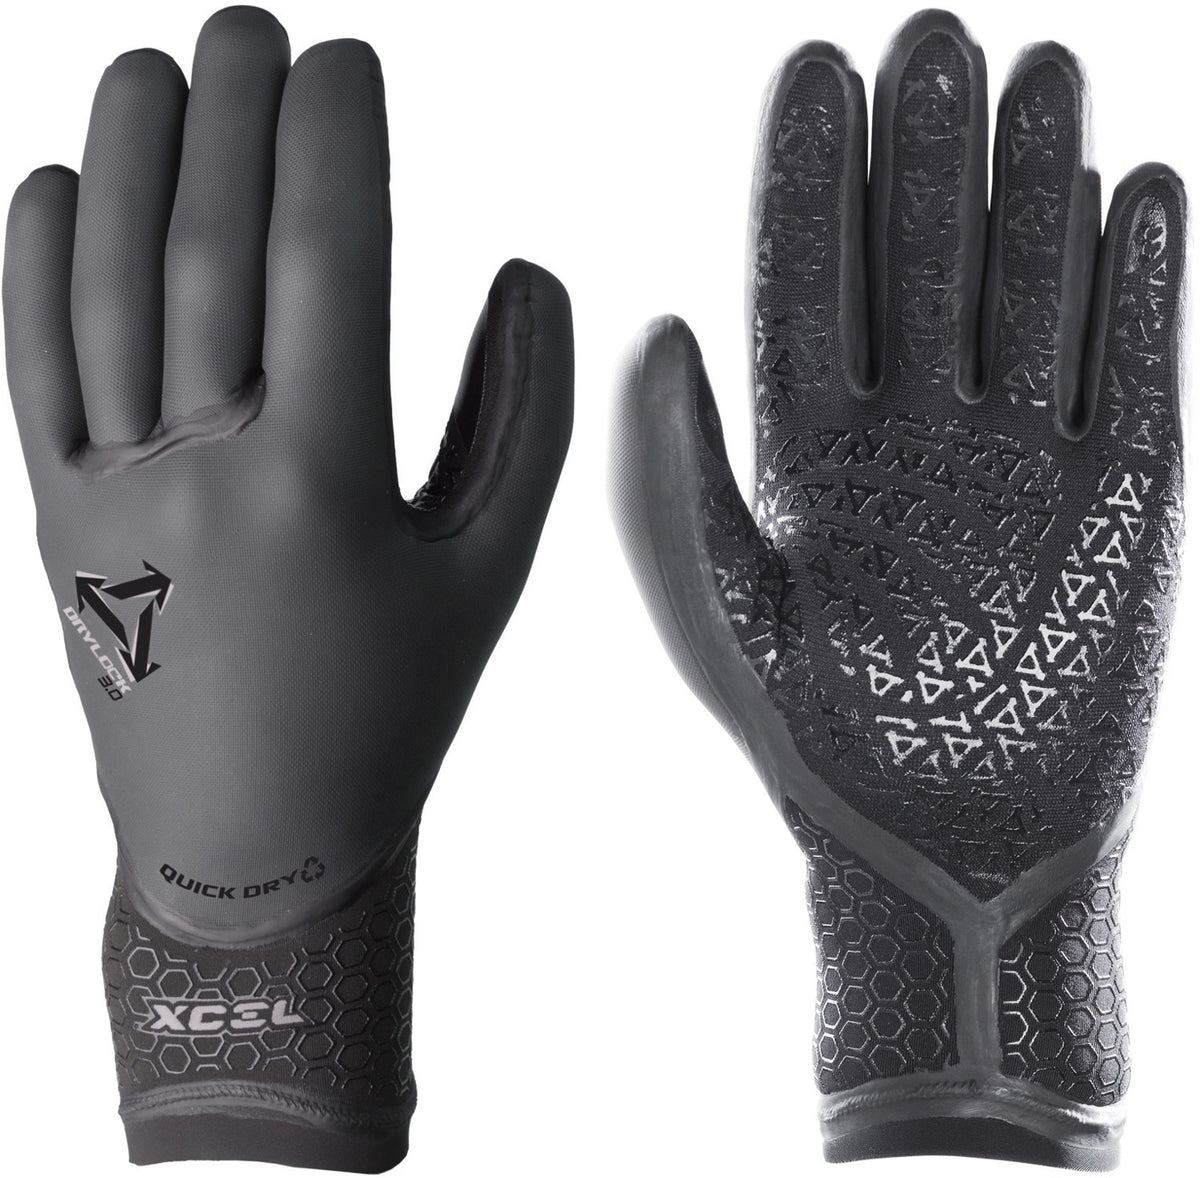 Drylock 3mm Gloves